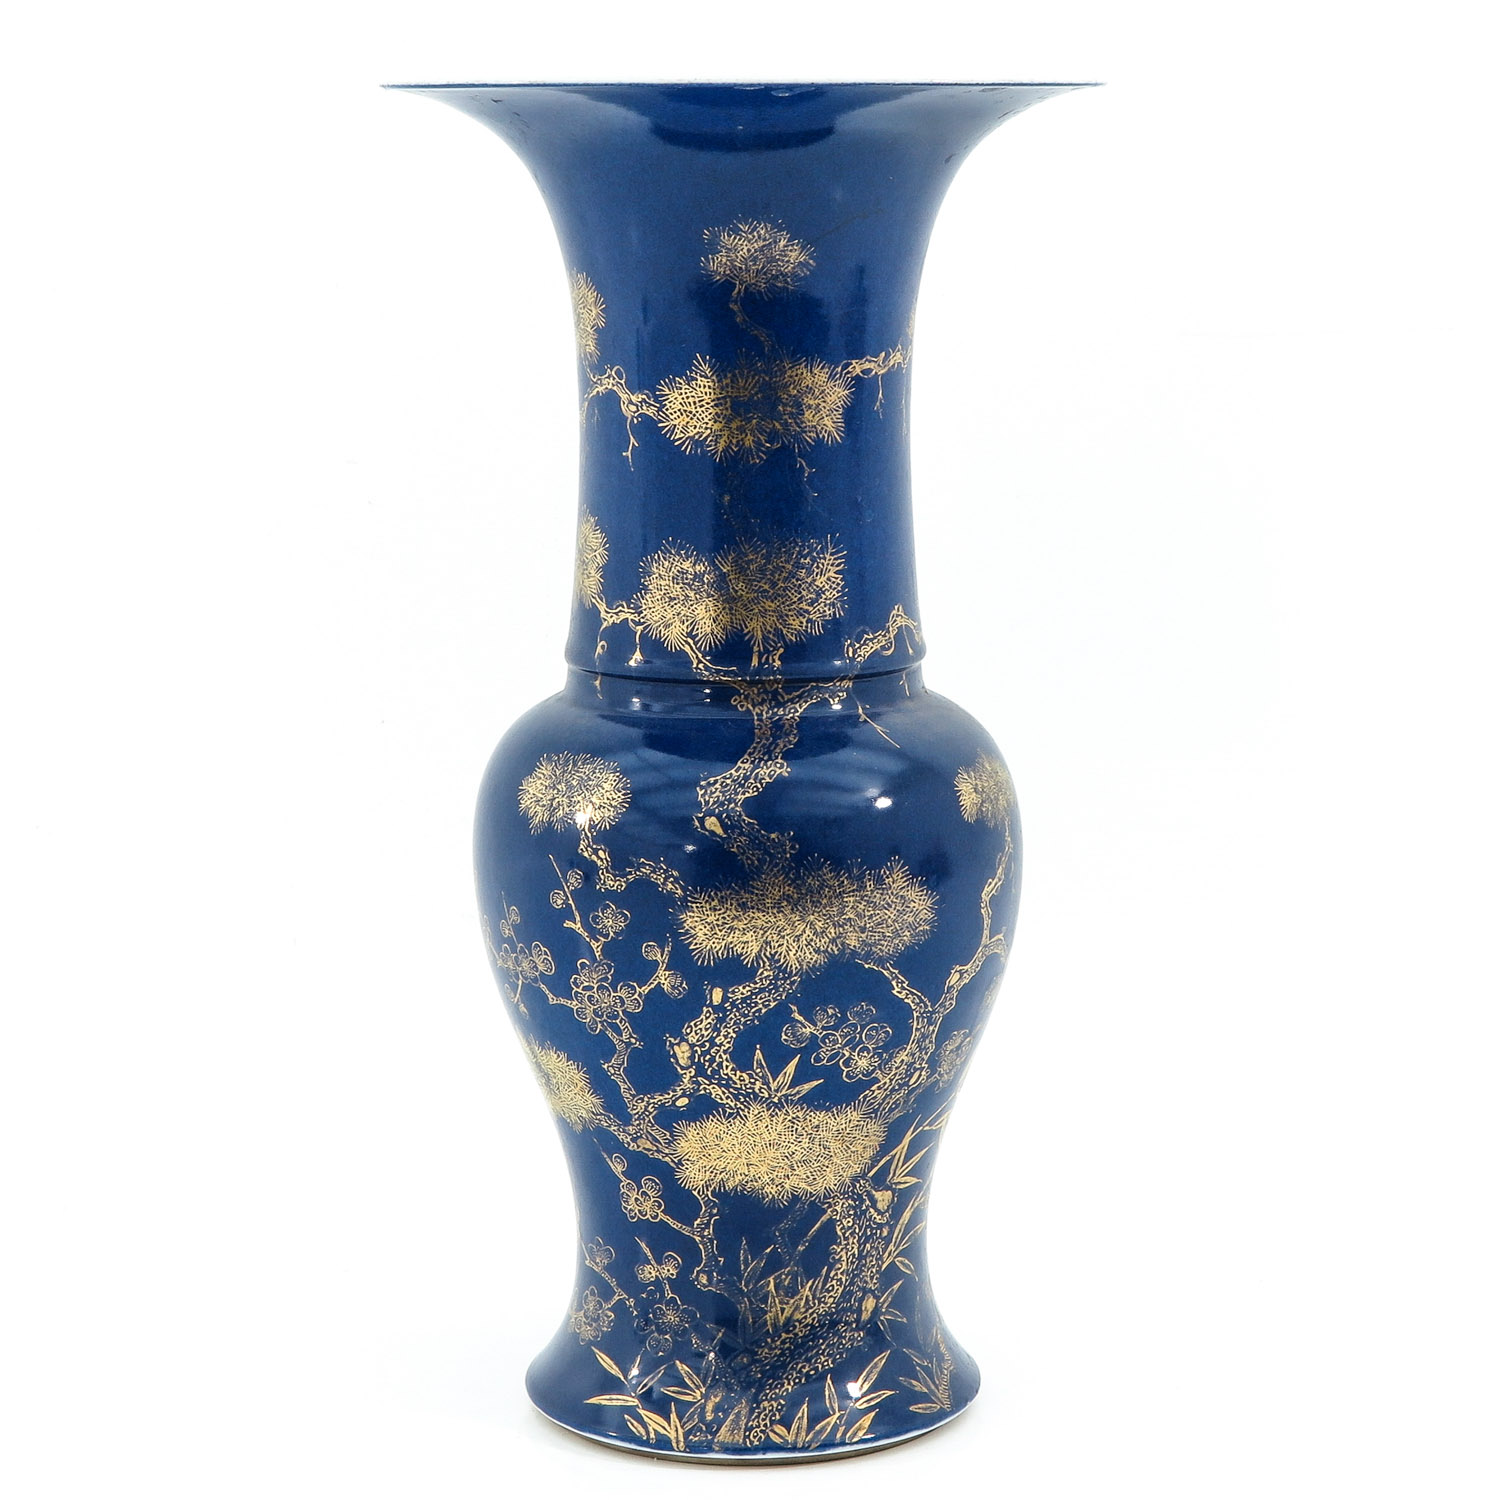 A Powder Blue and Gilt Decor Vase